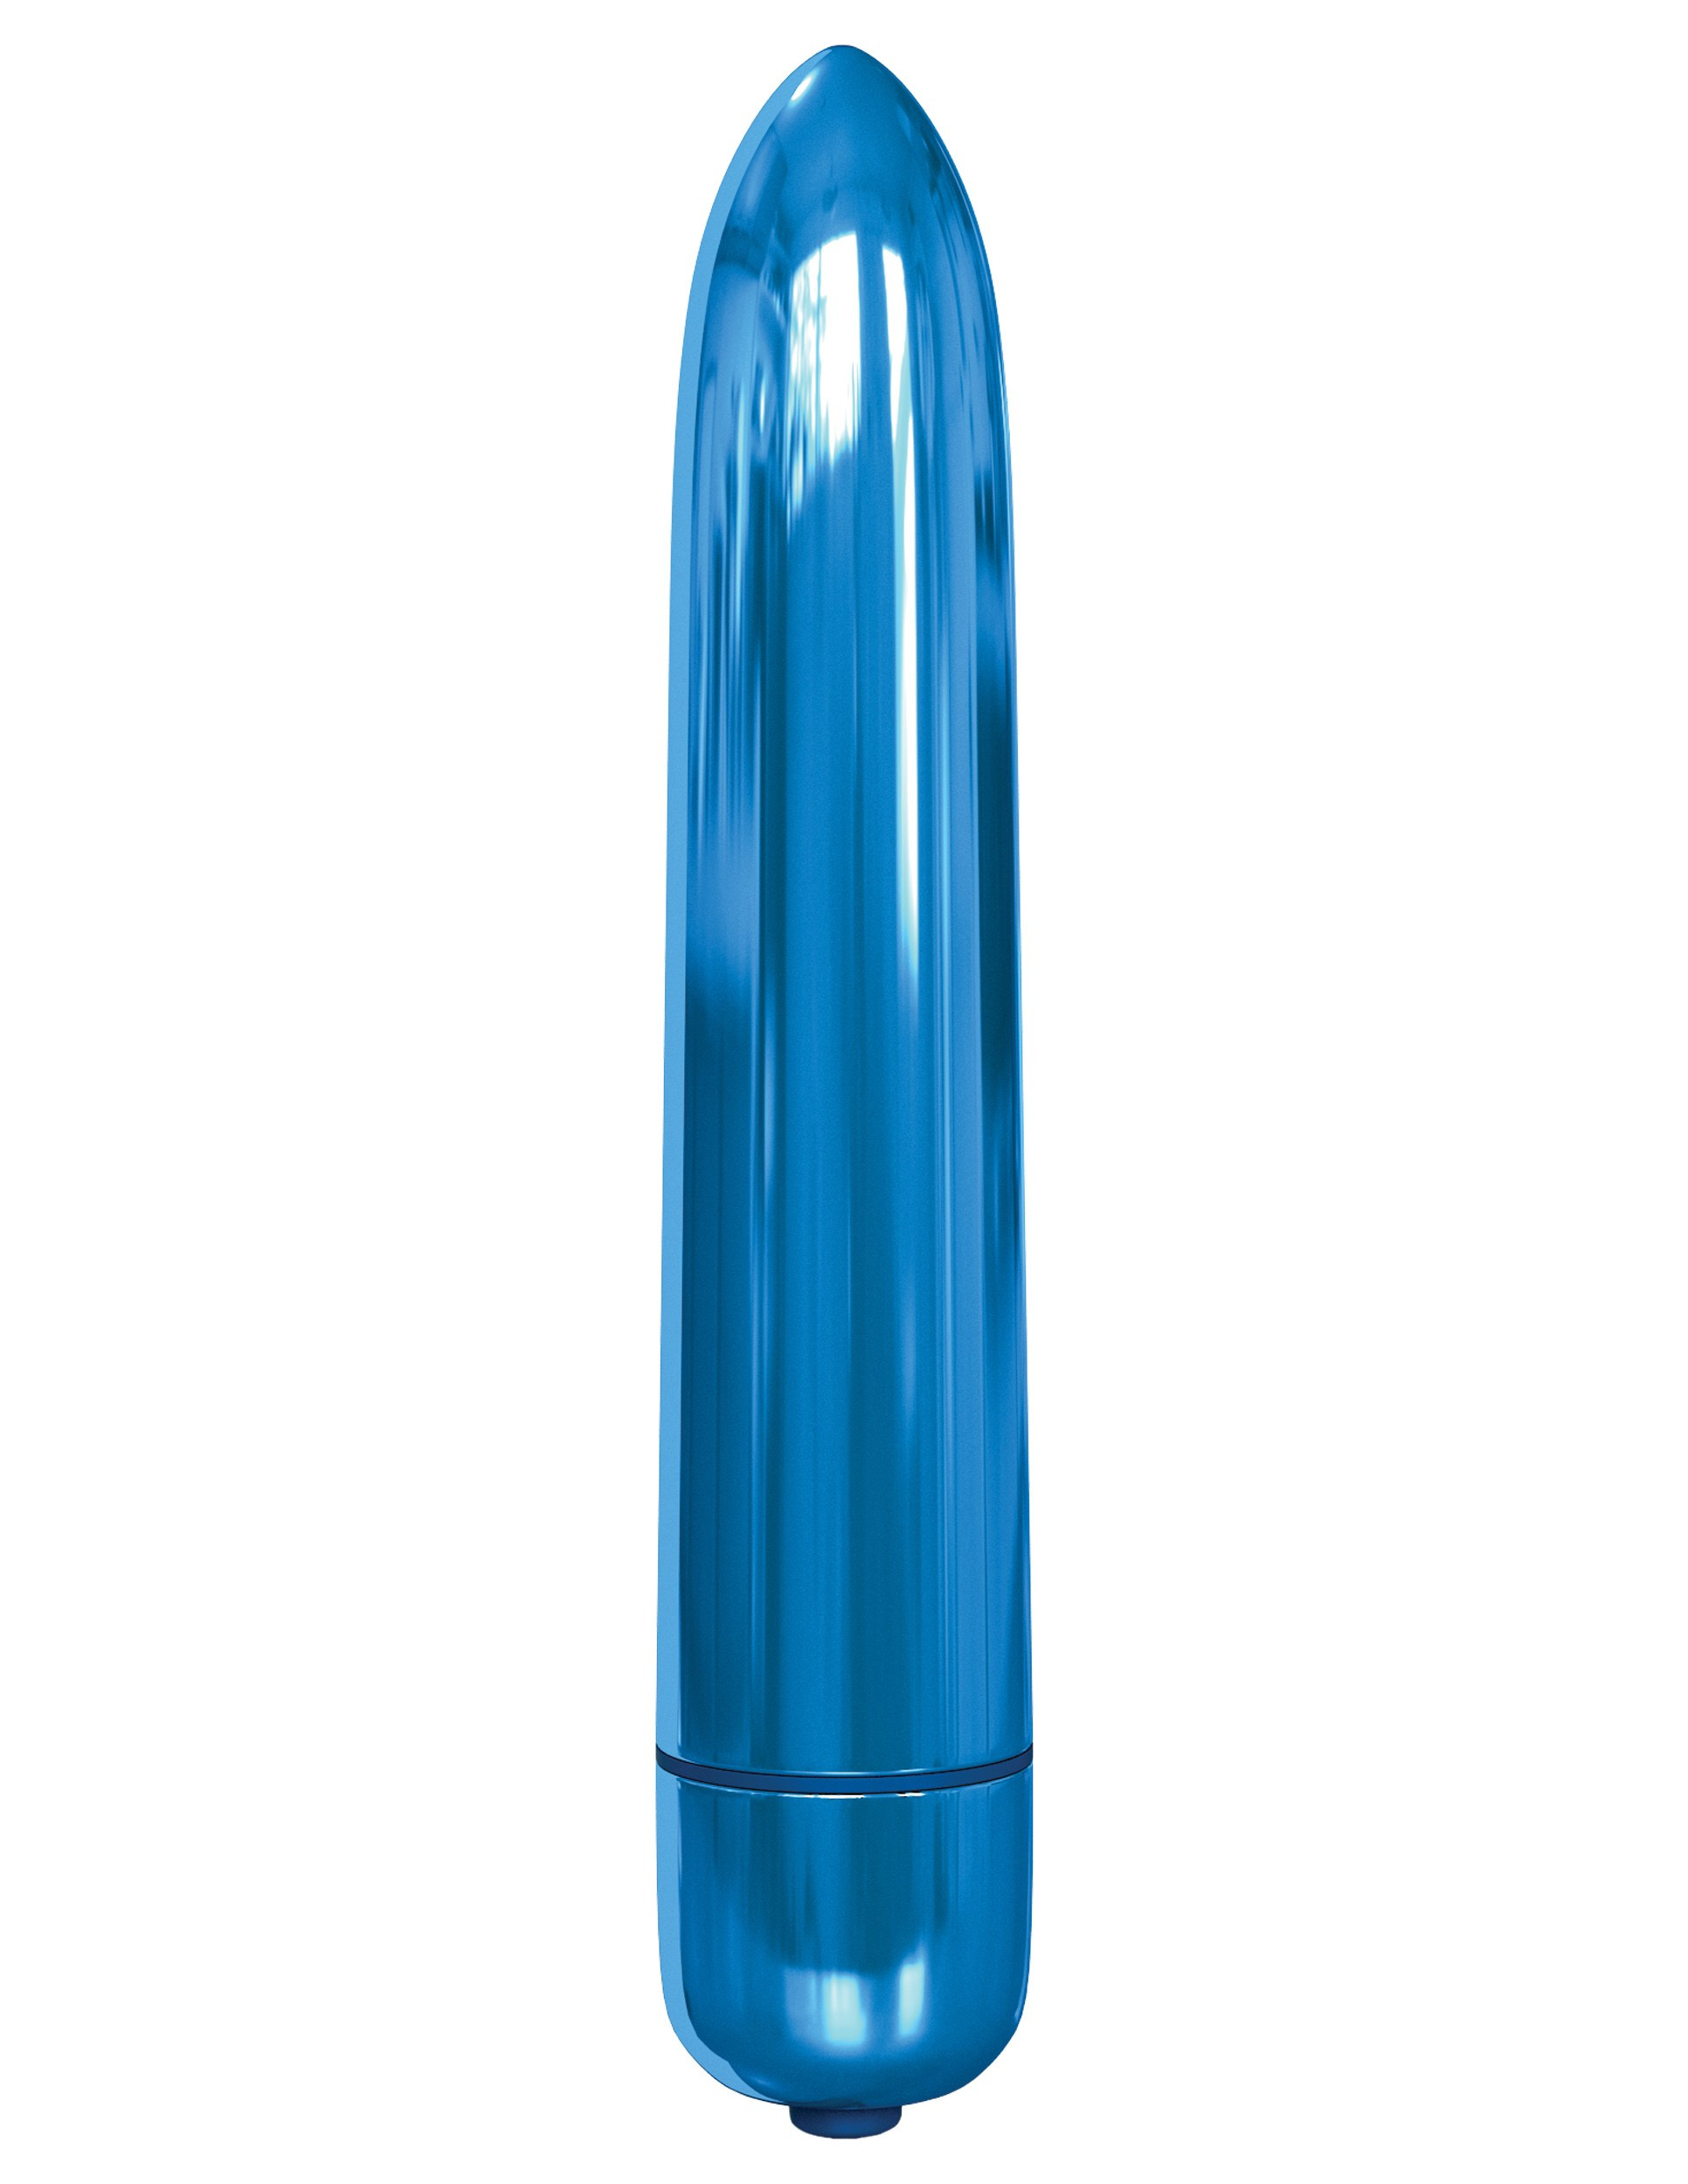 Bala Vibradora Classix Azul